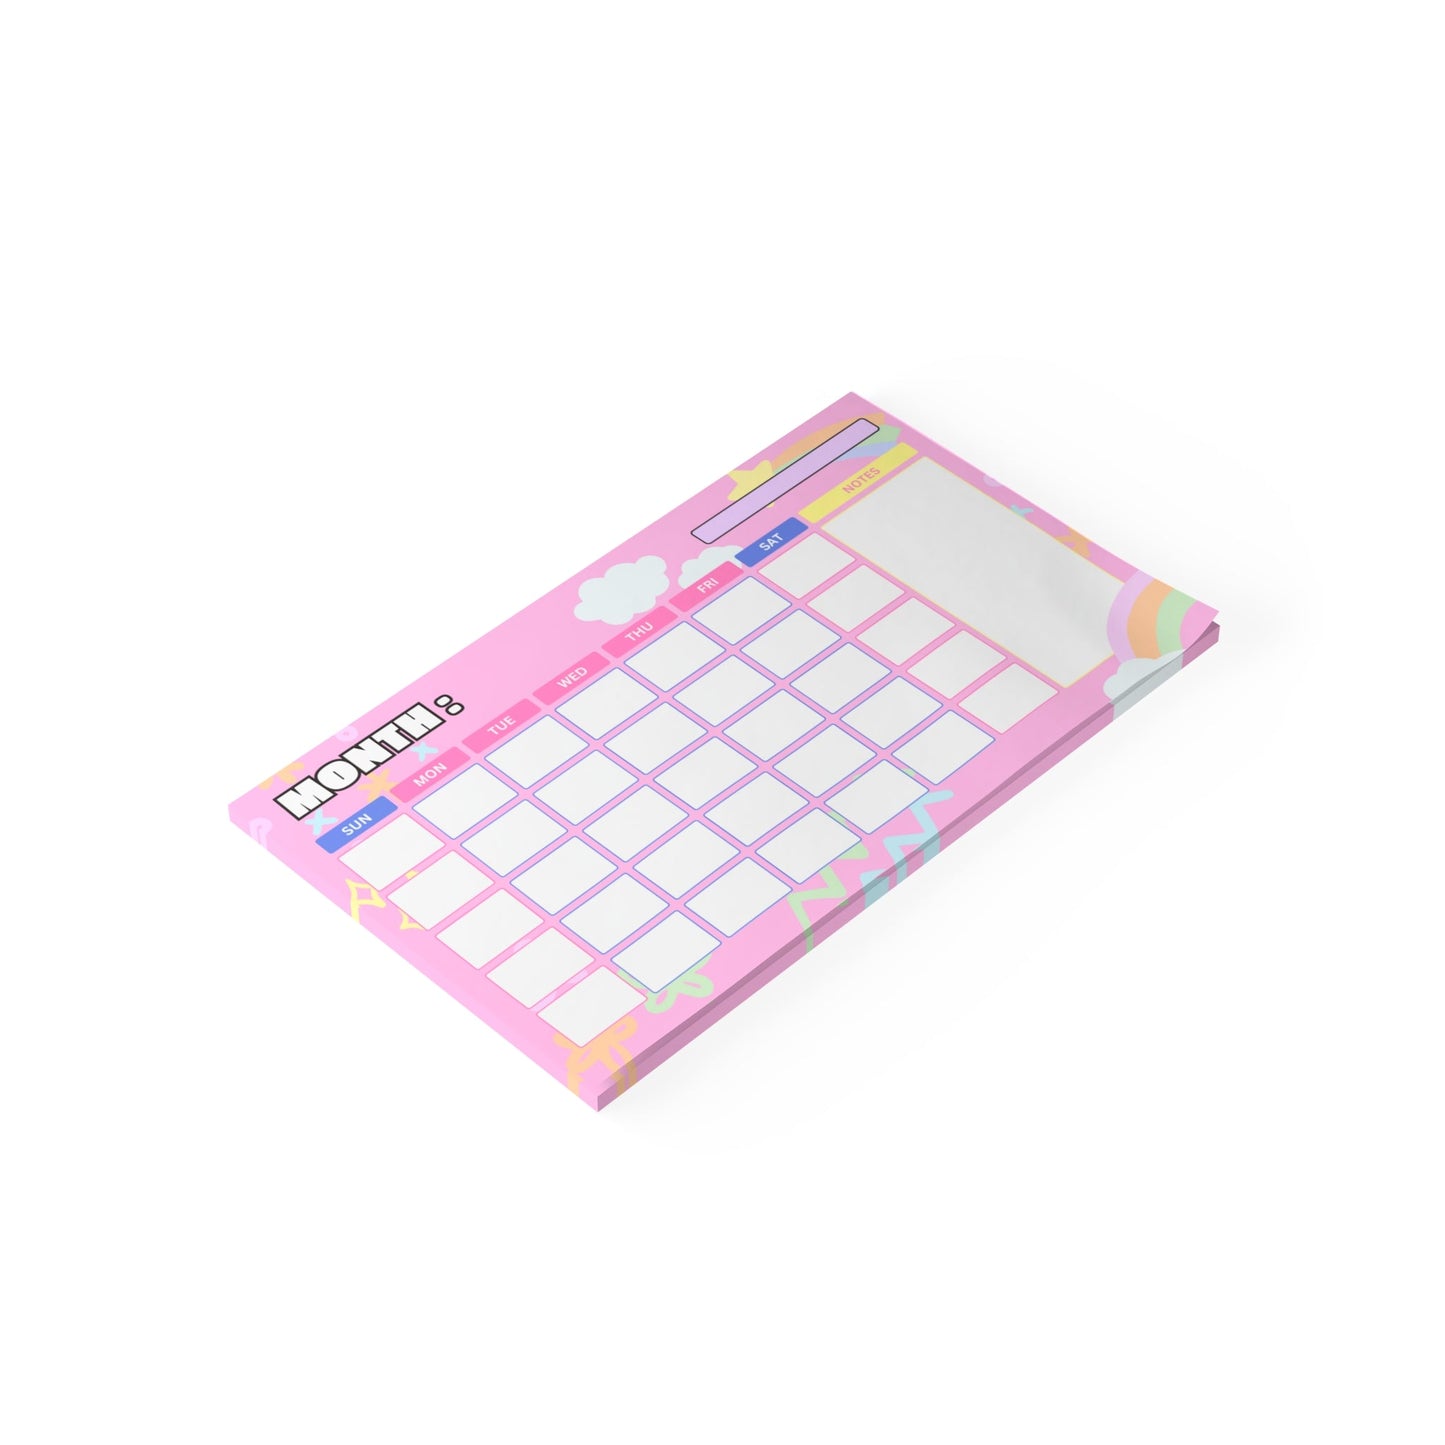 Kawaii Dreams Calendar Post-it® Note Pad Paper products Pink Sweetheart